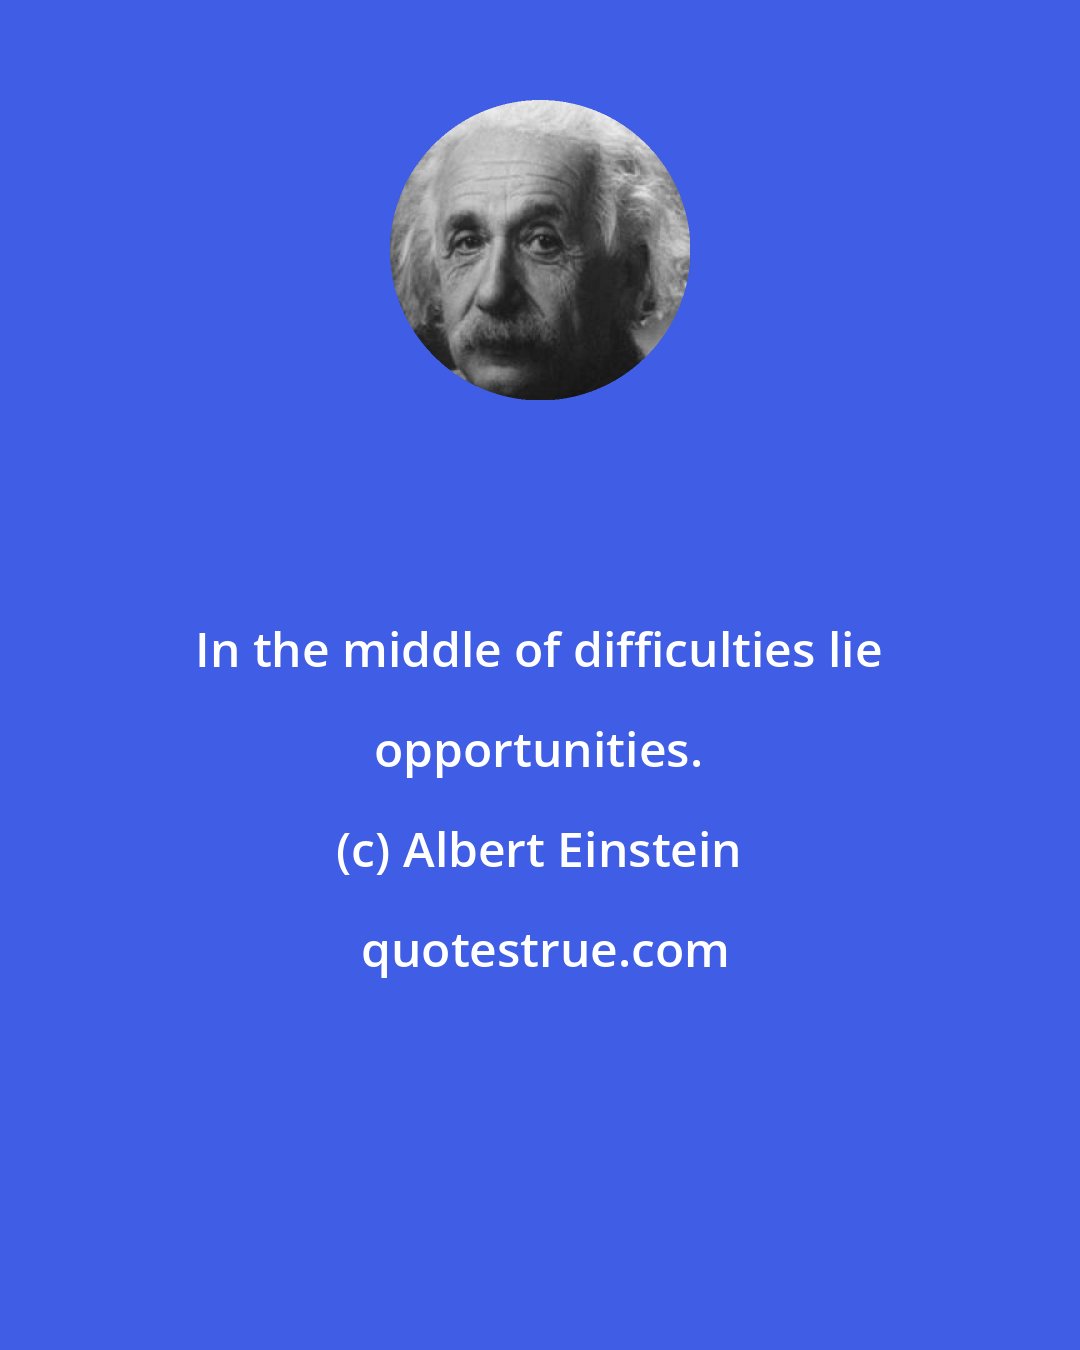 Albert Einstein: In the middle of difficulties lie opportunities.